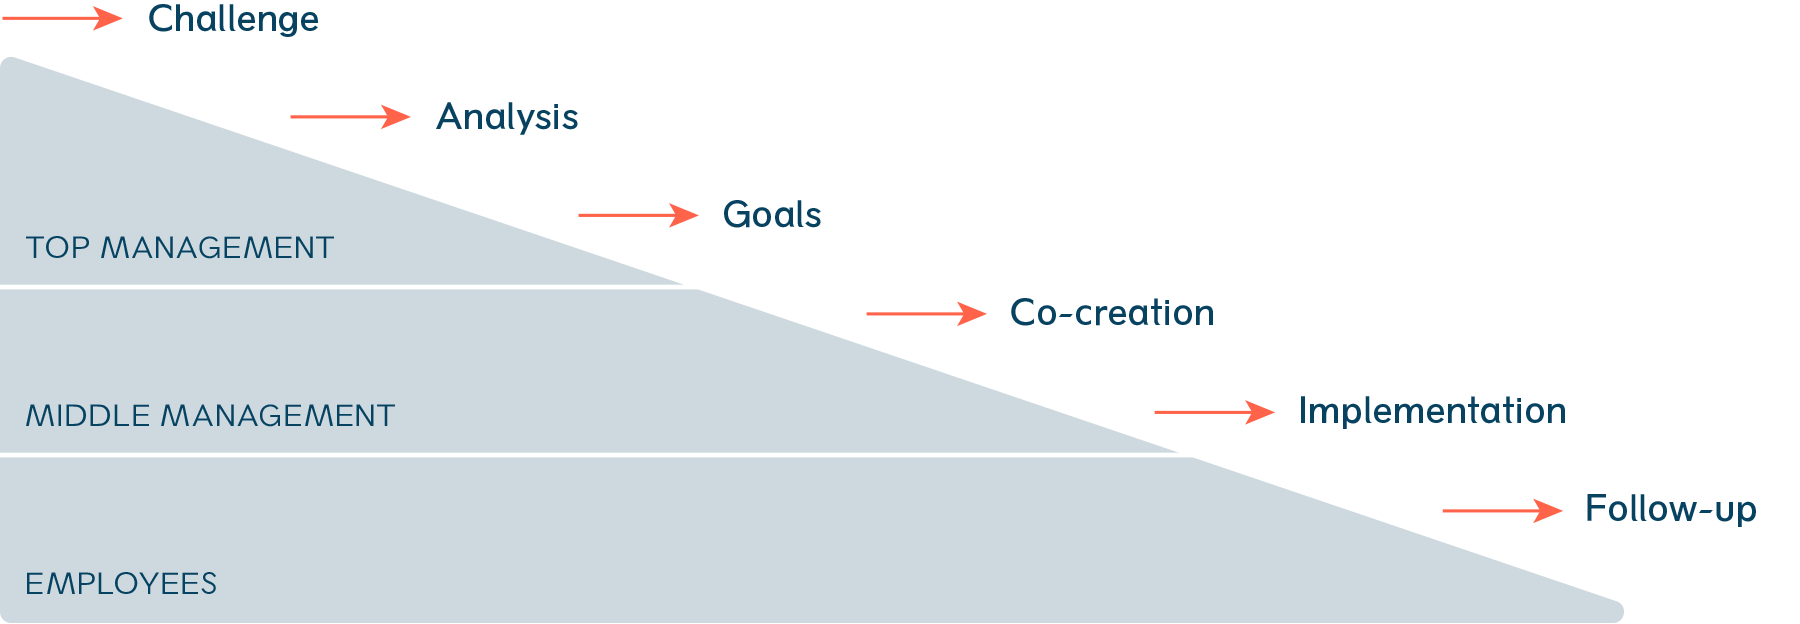 The Closer Process model